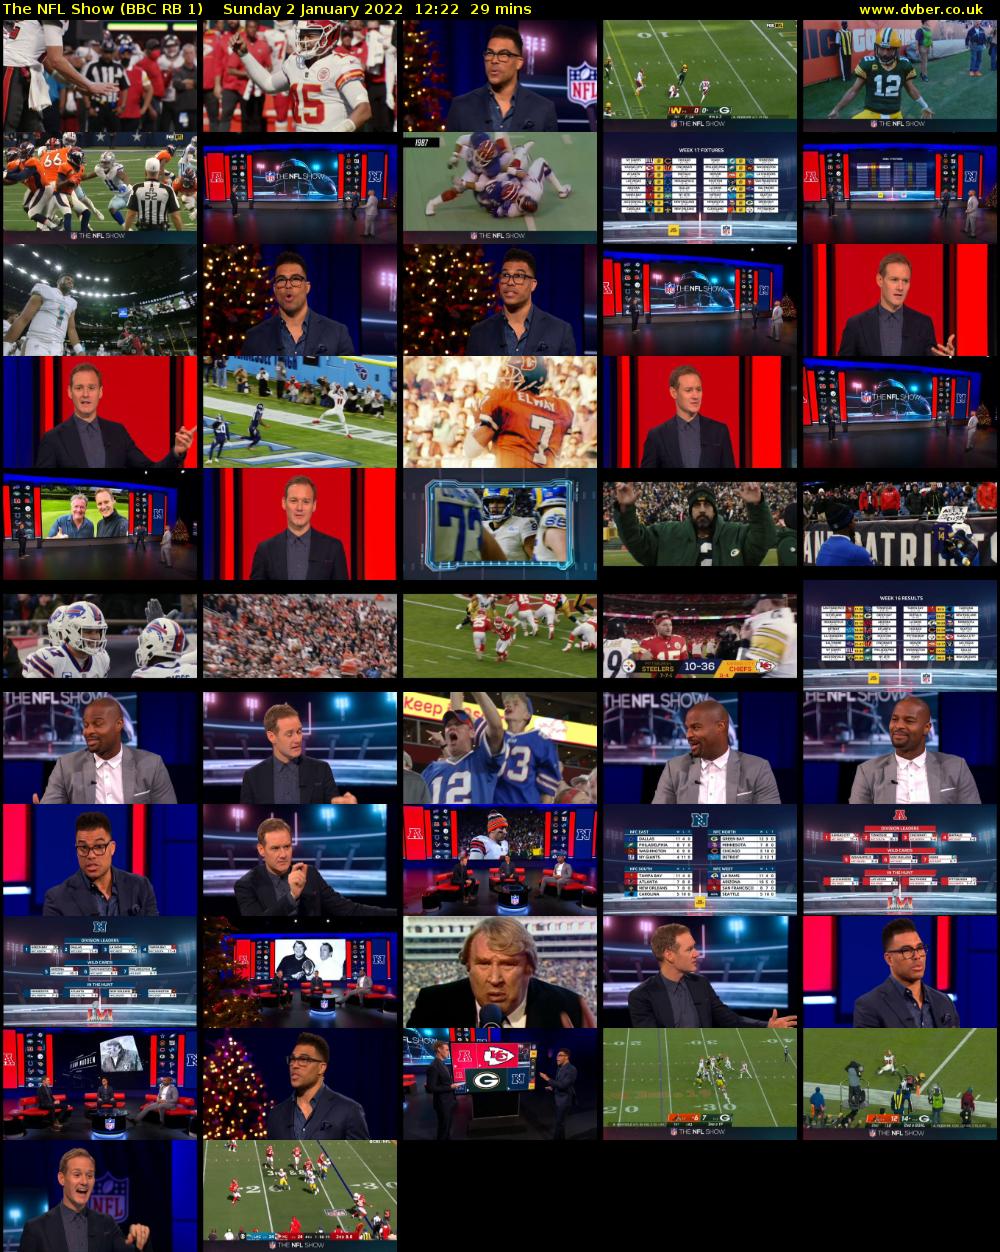 The NFL Show (BBC RB 1) Sunday 2 January 2022 12:22 - 12:51